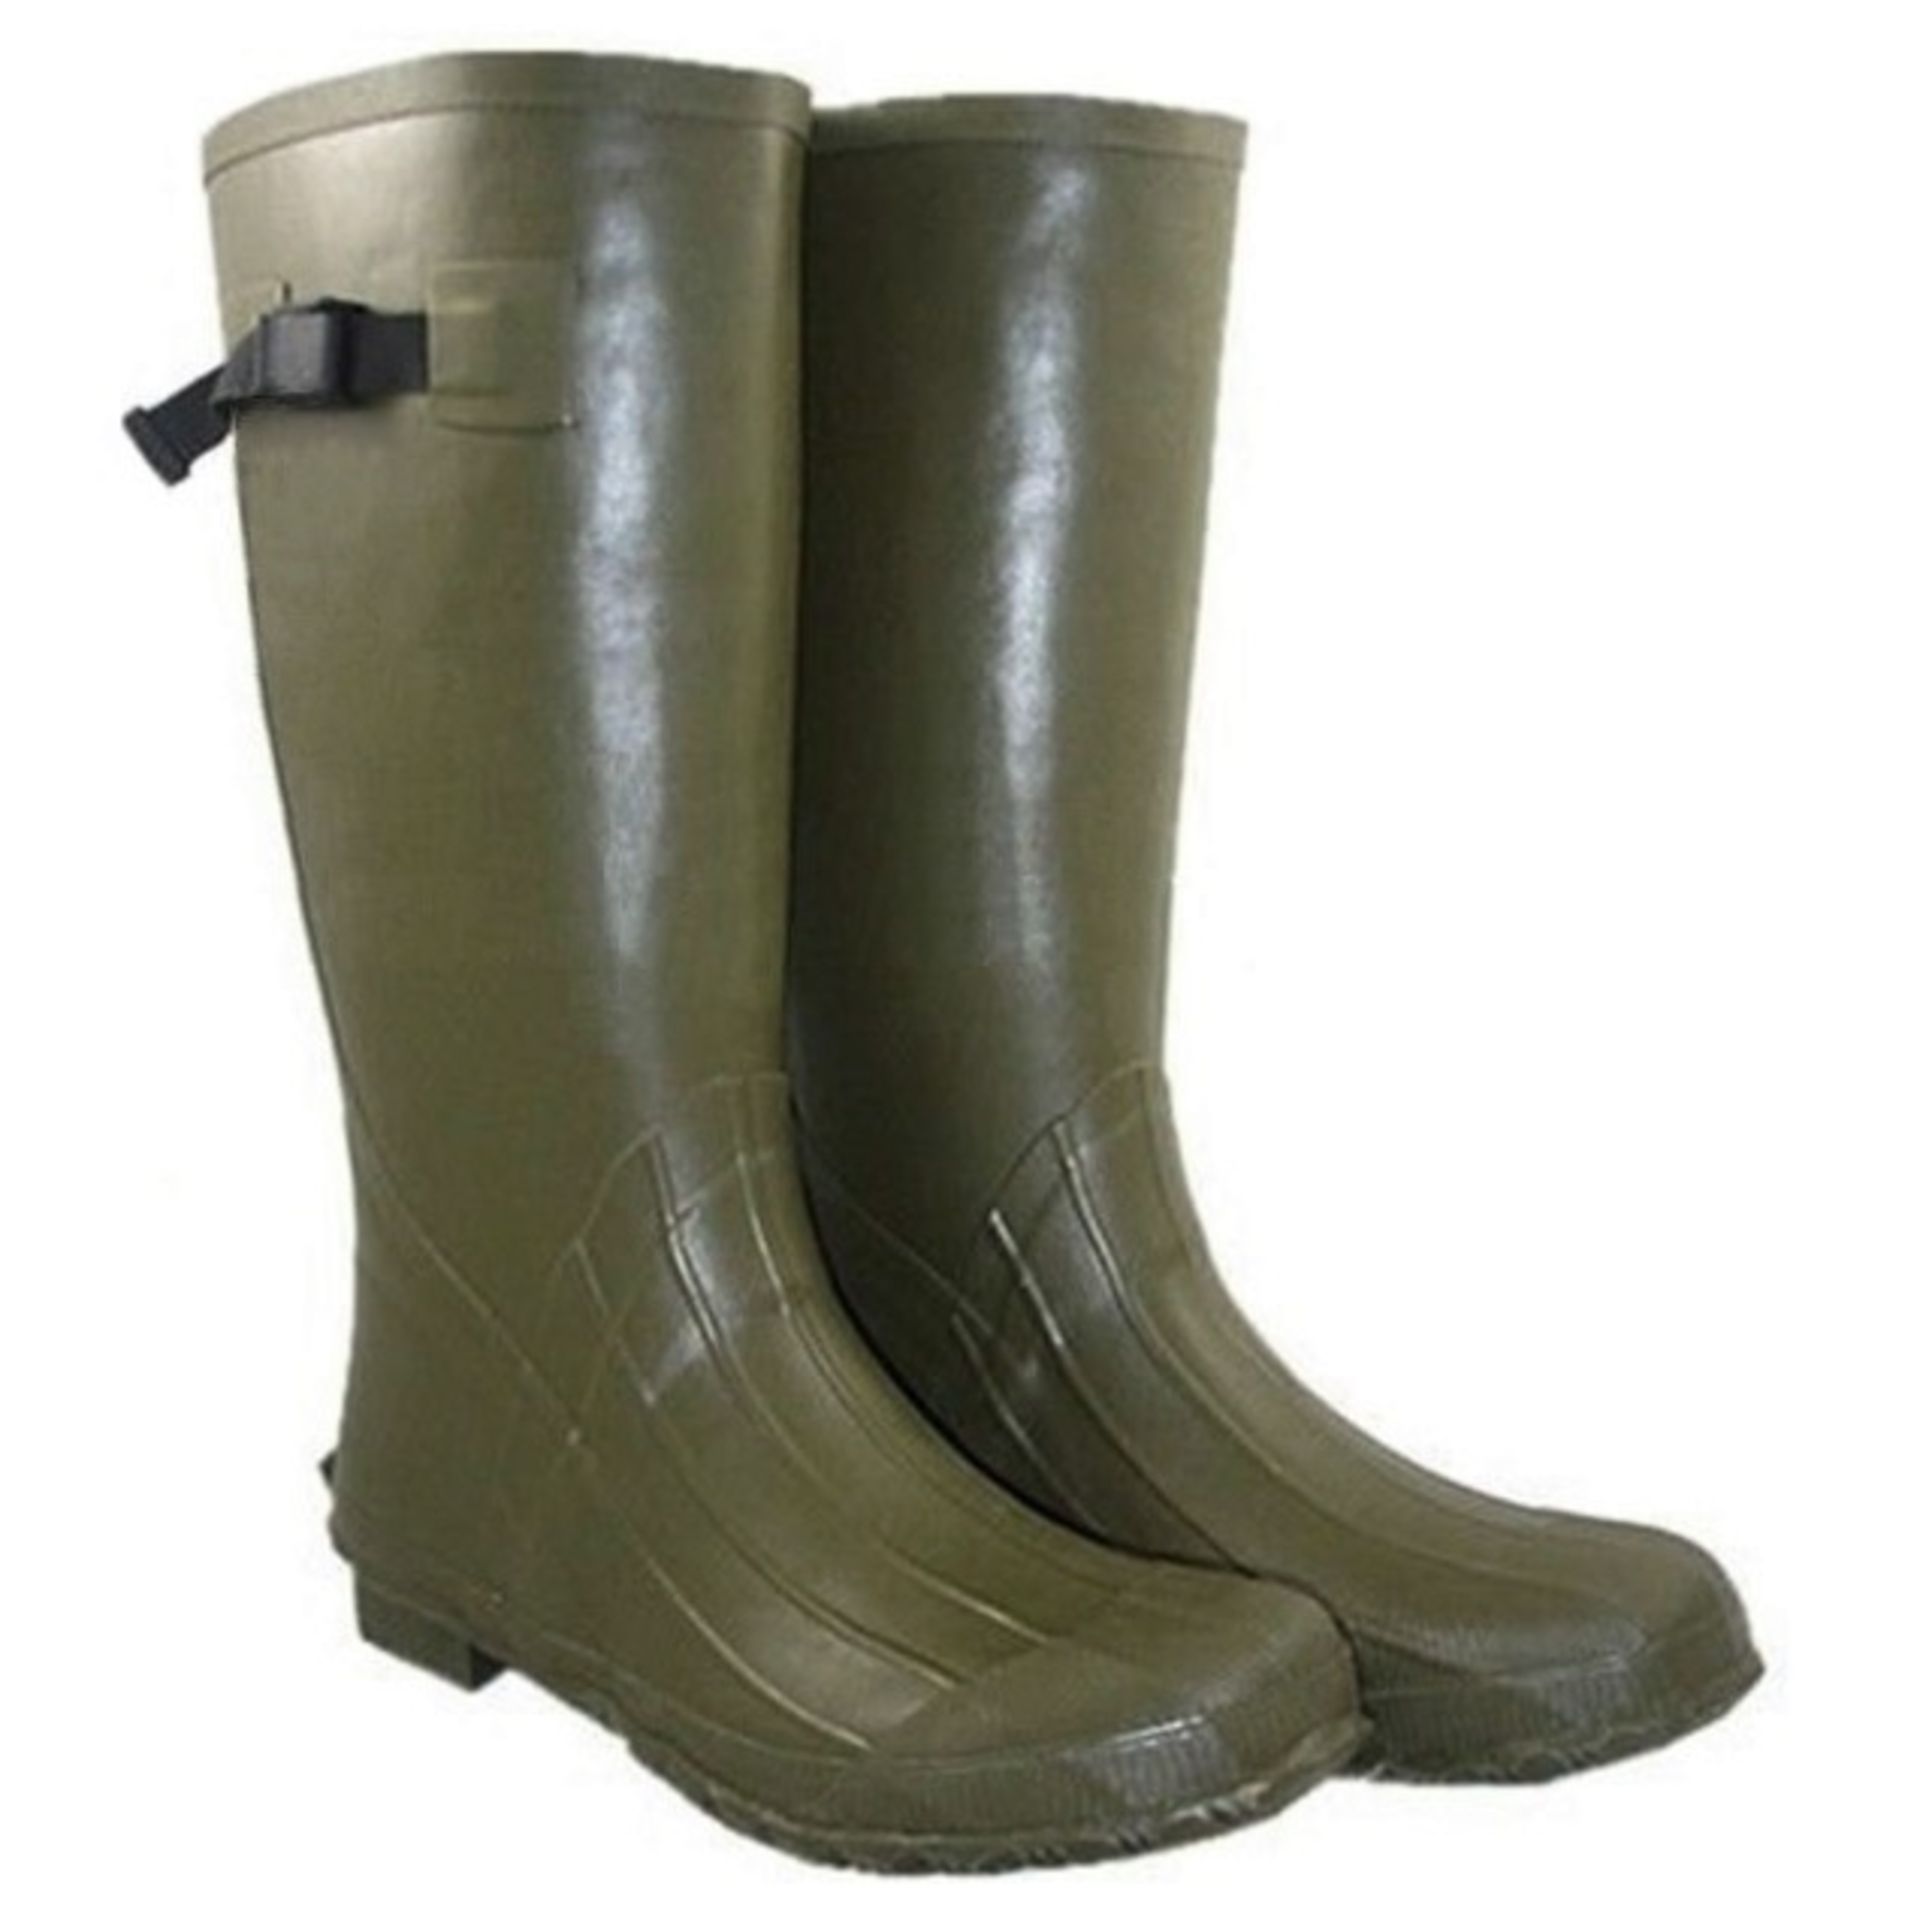 Mens new Wellington boots fishing hunting festival khaki (USA 11) Size UK 10 steel shank base